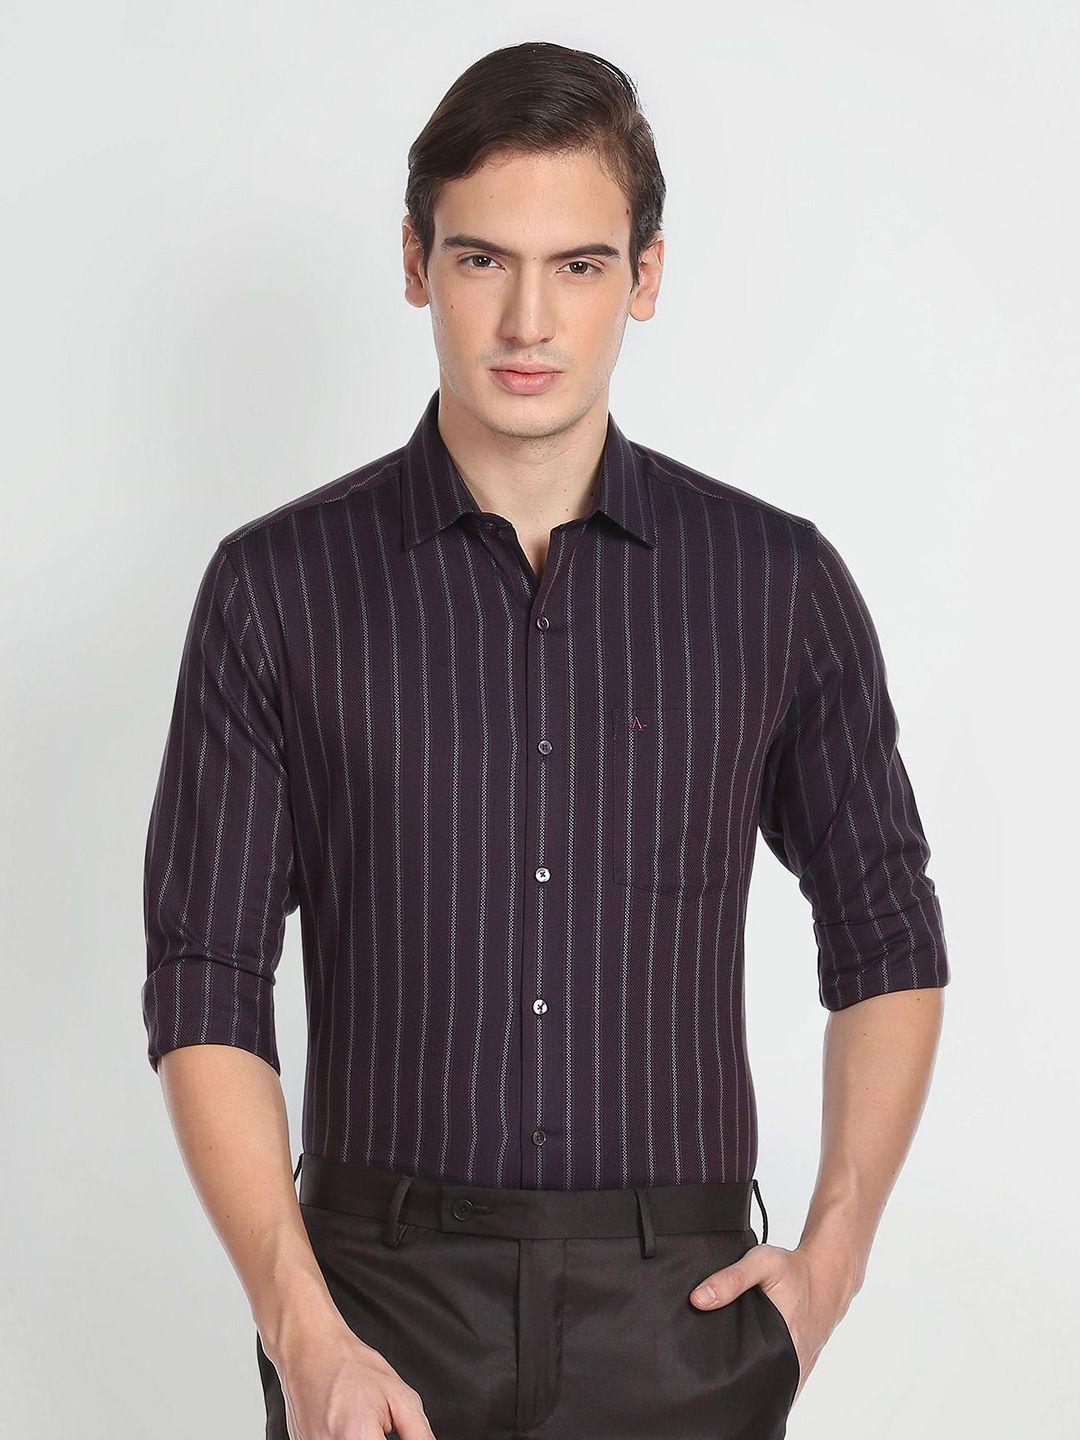 arrow men pure cotton opaque striped formal shirt